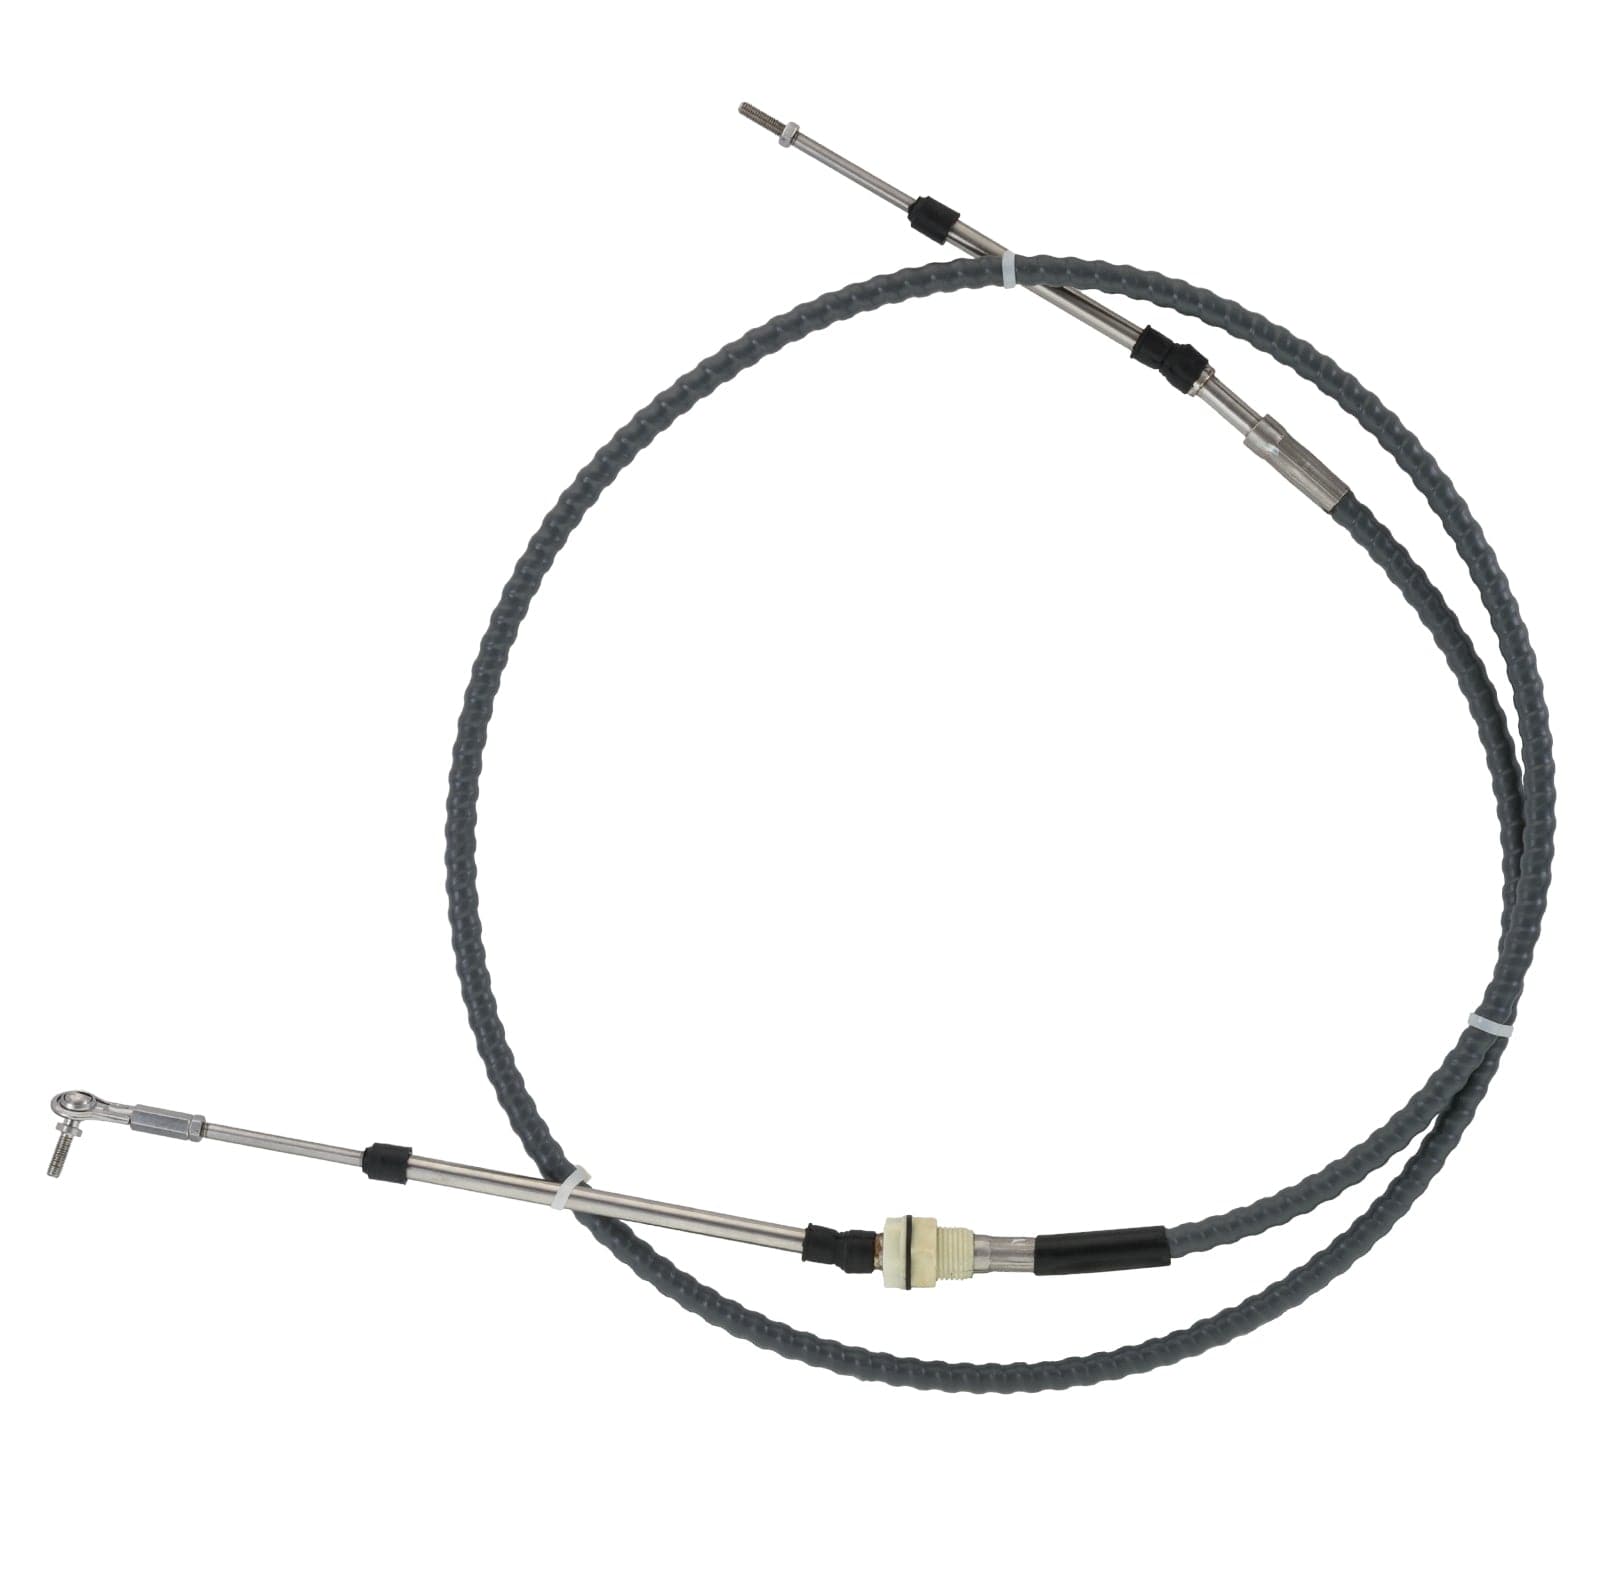 Throttle Cable for Yamaha Wave Runner III 700 EU0-67252-02-00 1997